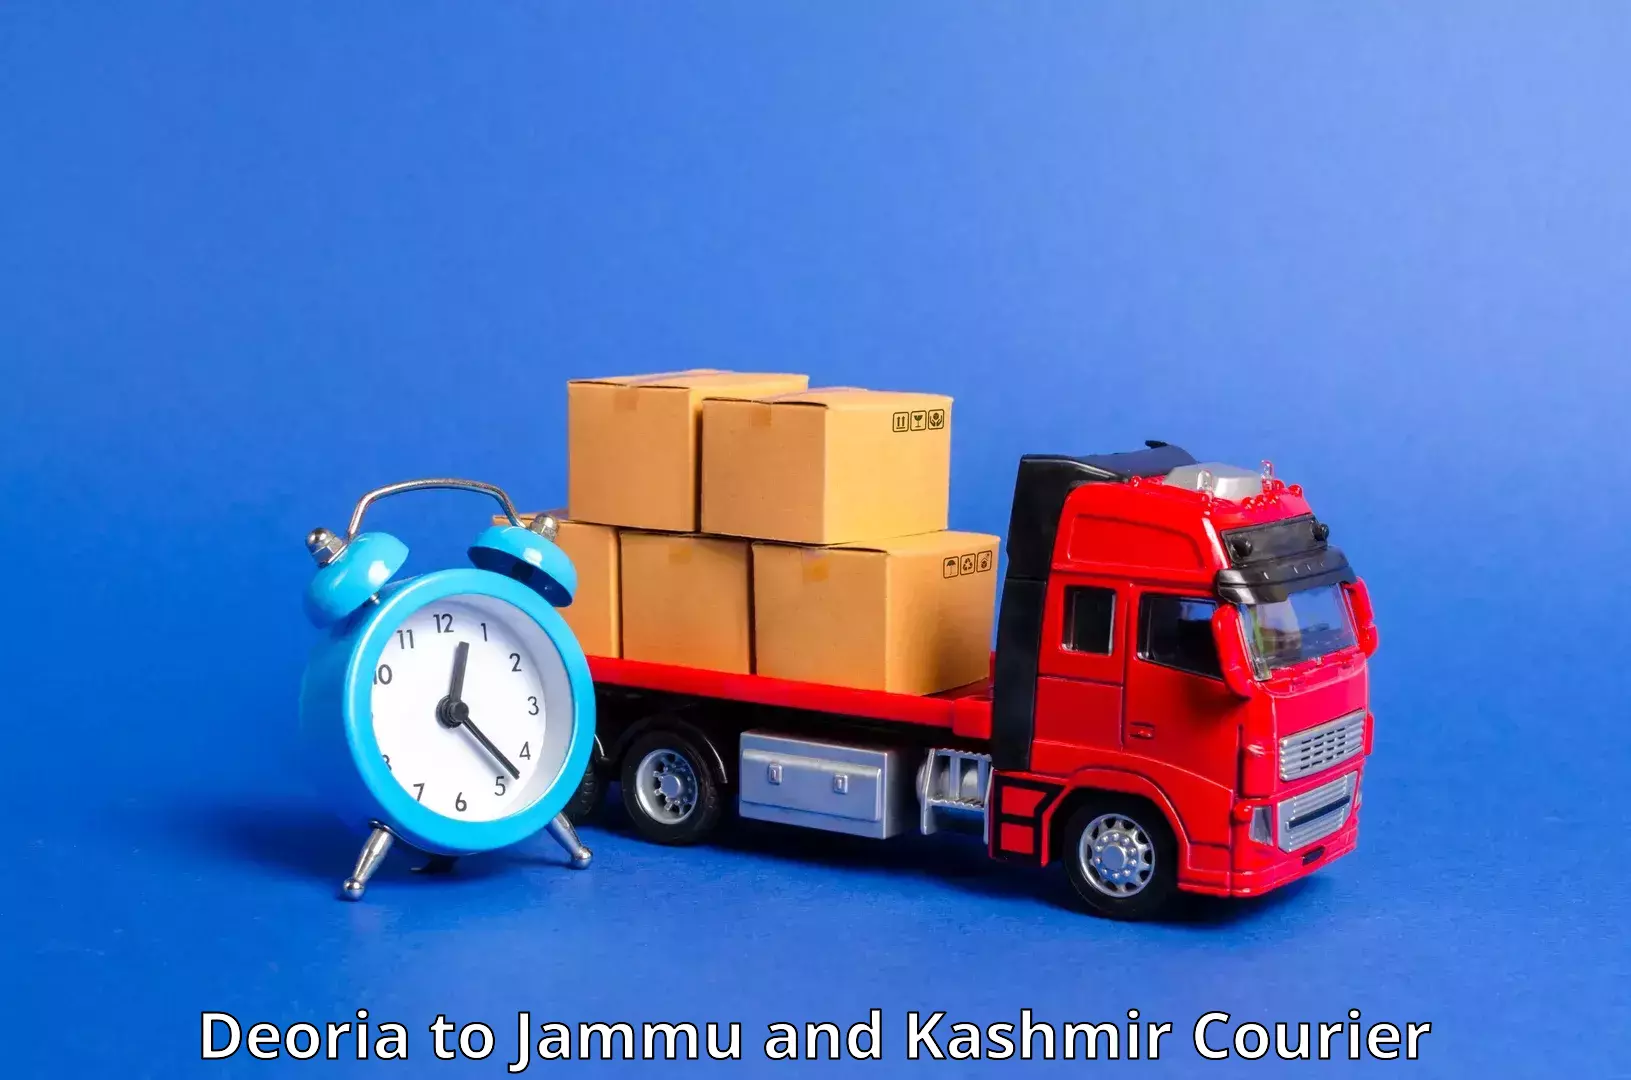 Express delivery capabilities Deoria to Billawar